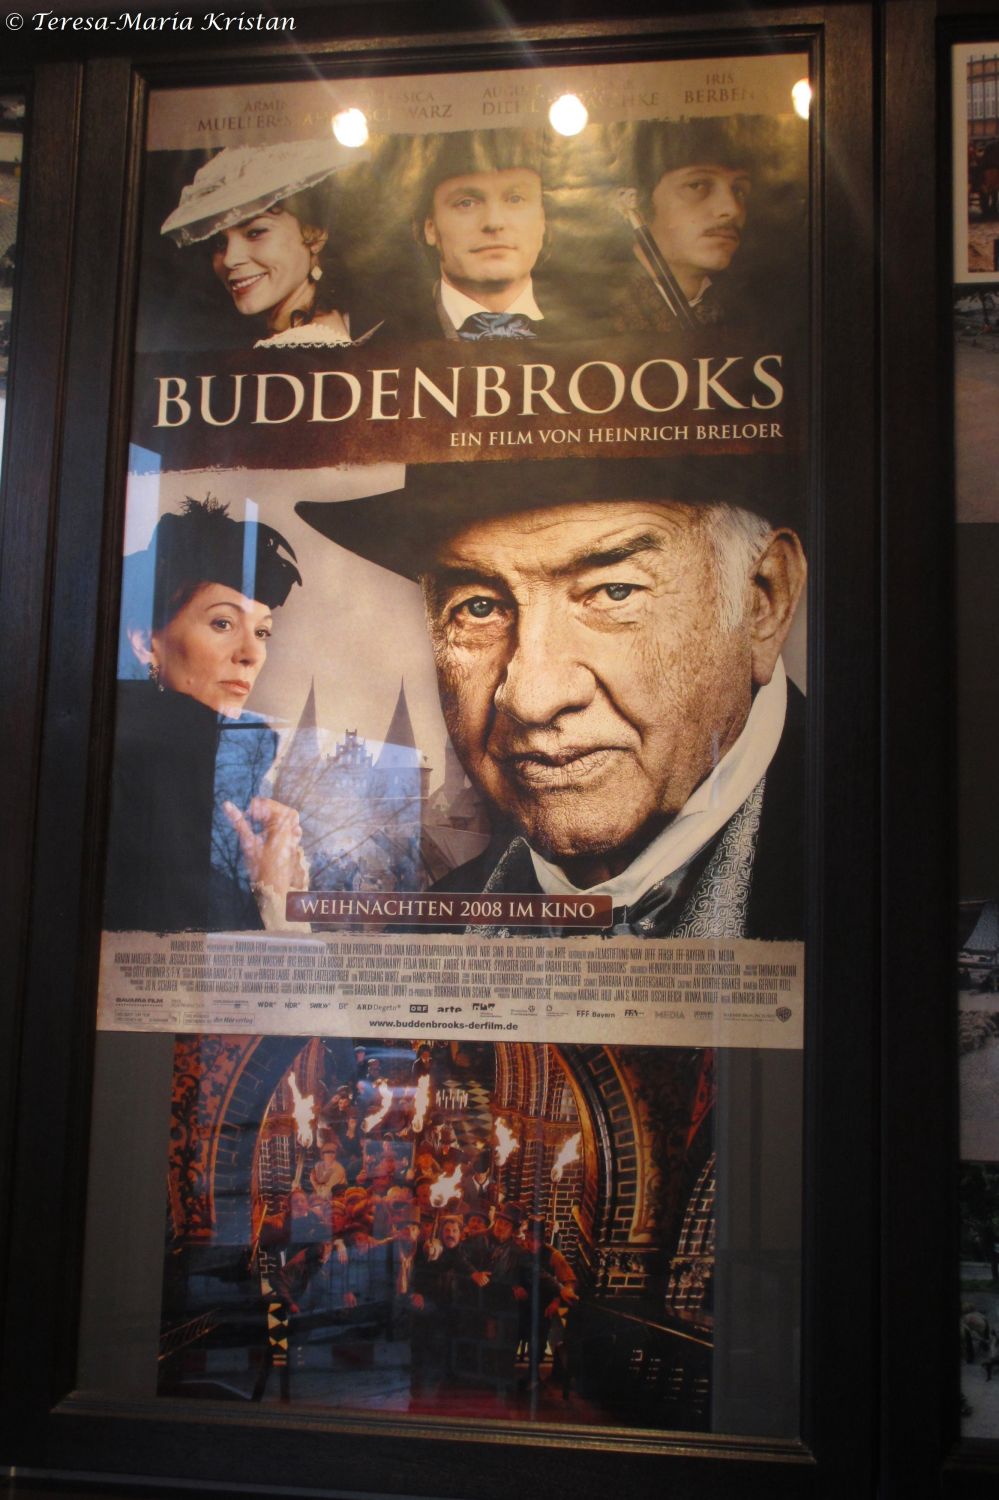 Filmplakat der Buddenbrooks in Lübeck